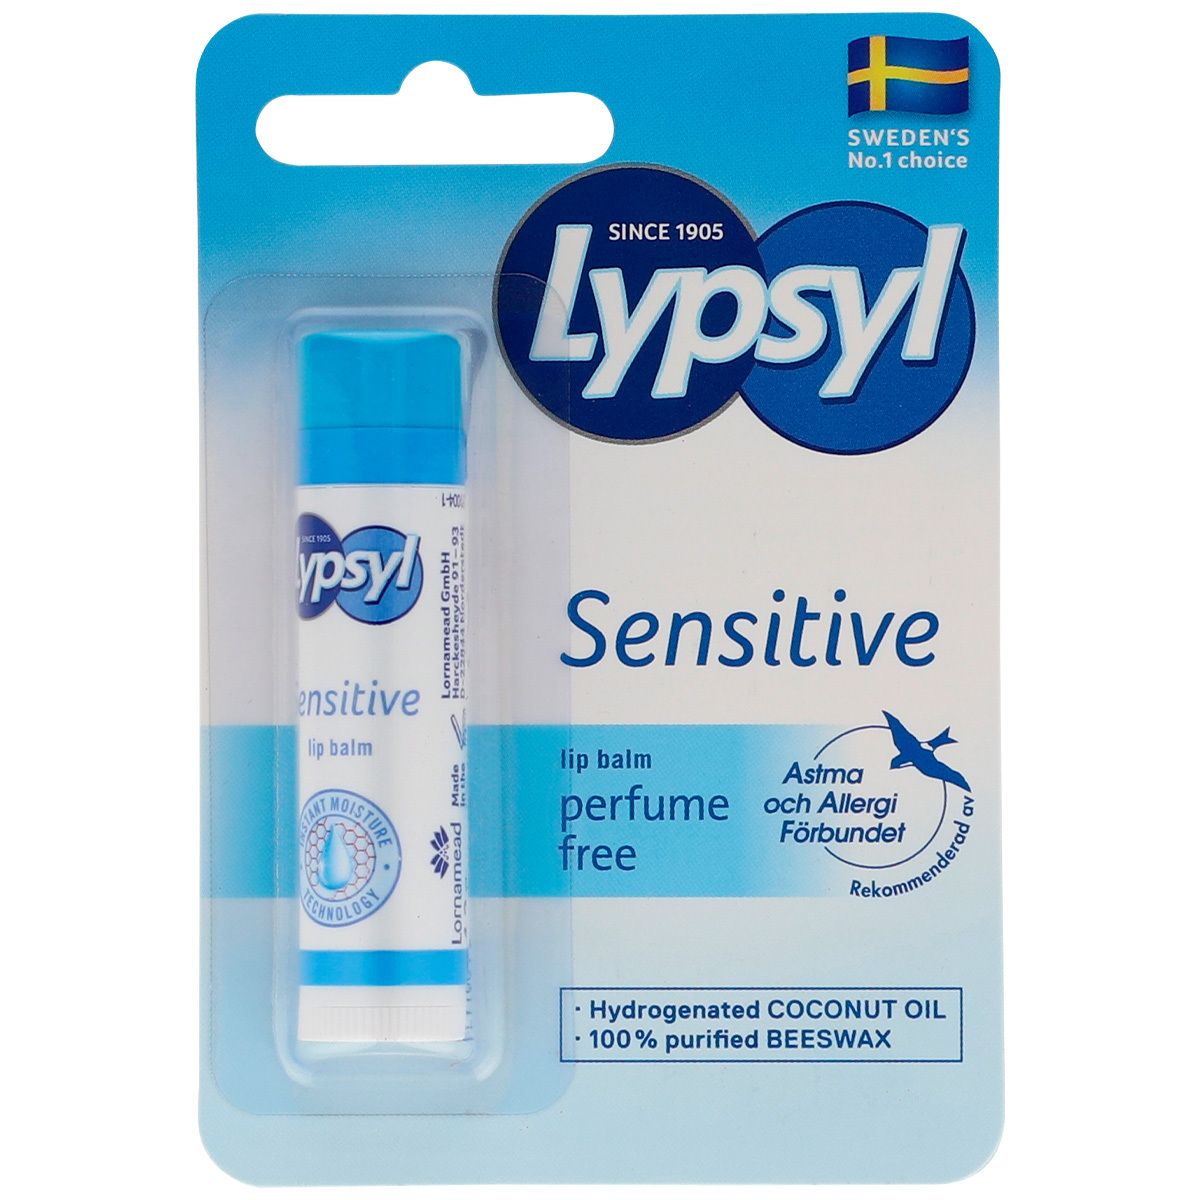 kløft Kammer Med det samme Lypsyl Sensitive læbepomade - 4,2 g. - Med24.dk